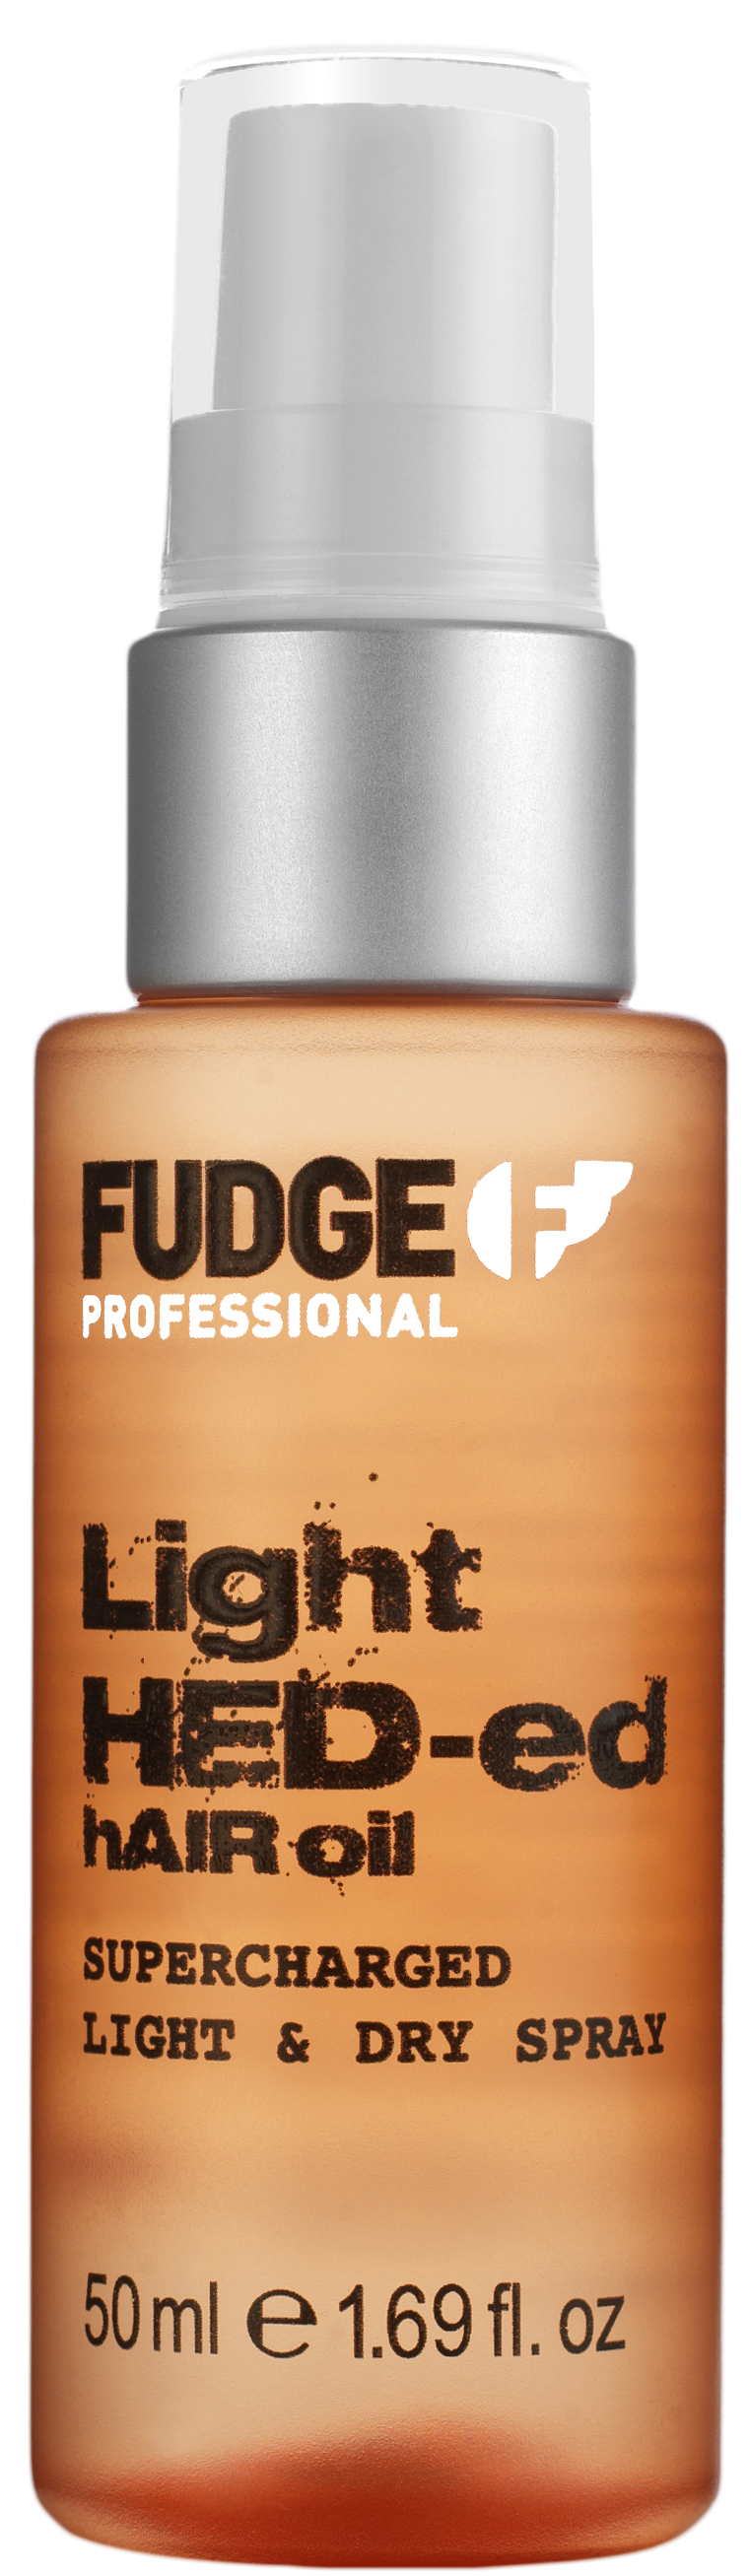 Fudge Light HED-ed Hair Oil Light & Dry Spray 50ml